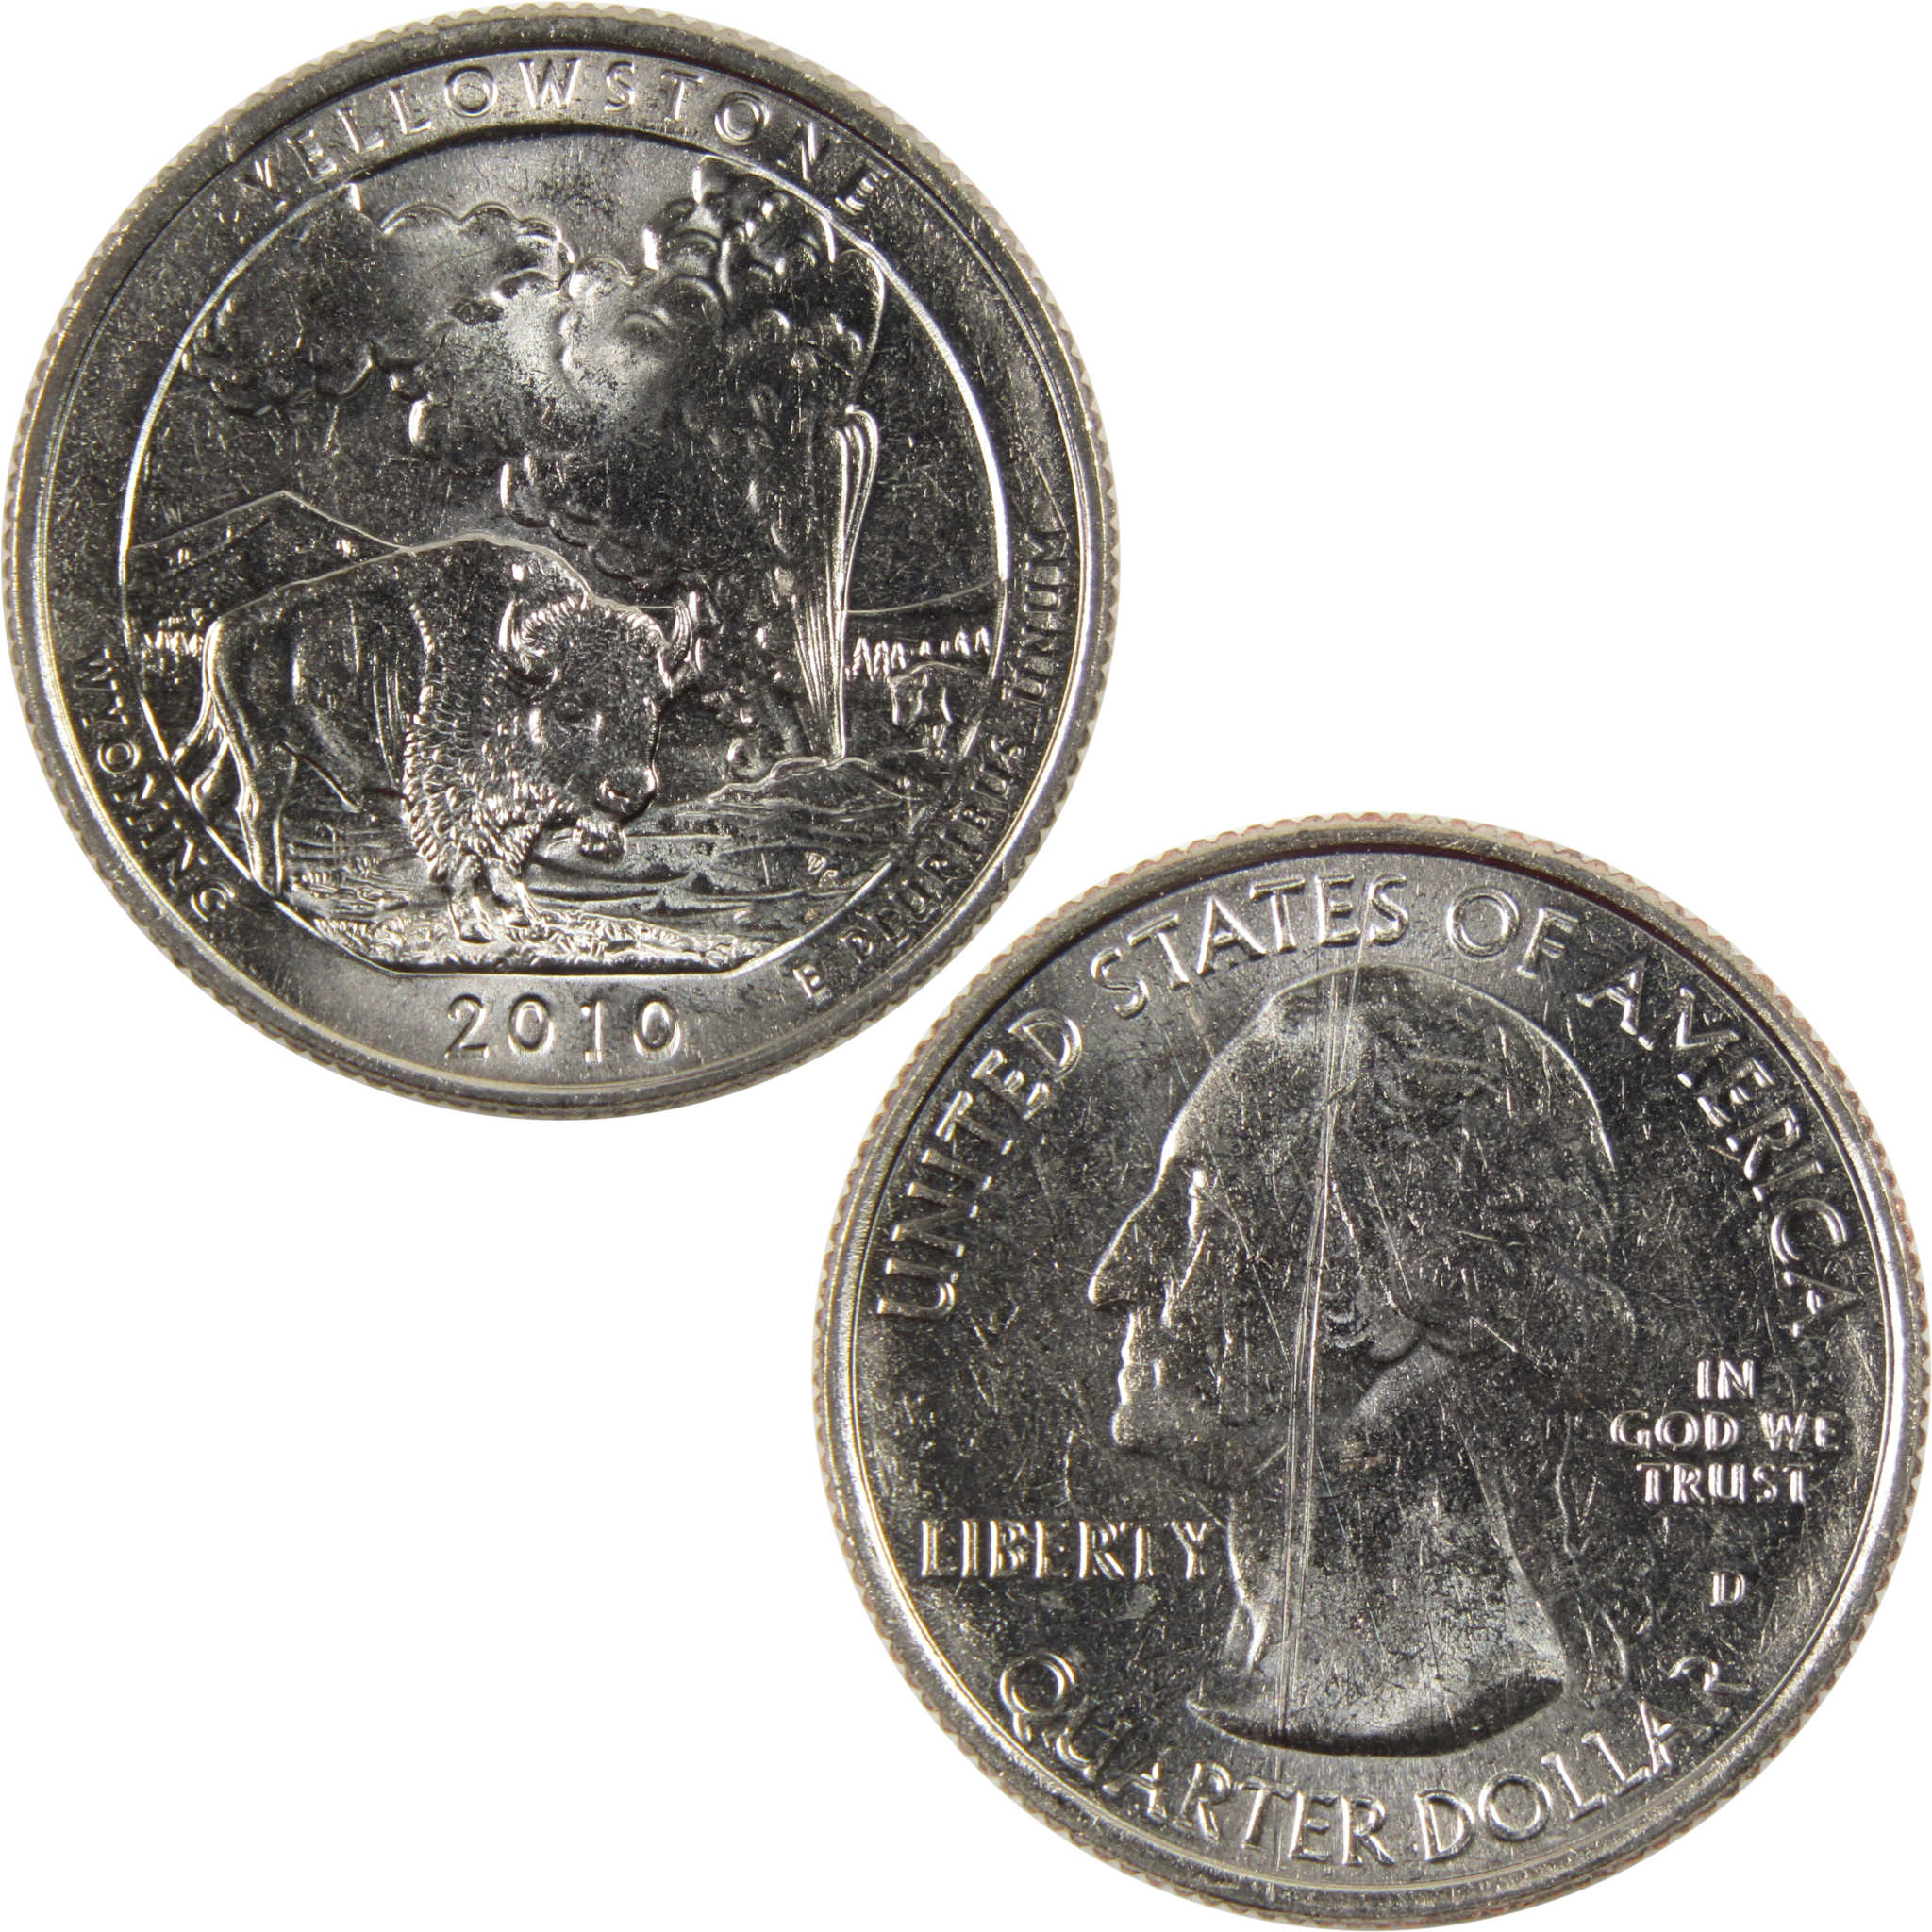 2010 D Yellowstone National Park Quarter BU Uncirculated Clad 25c Coin